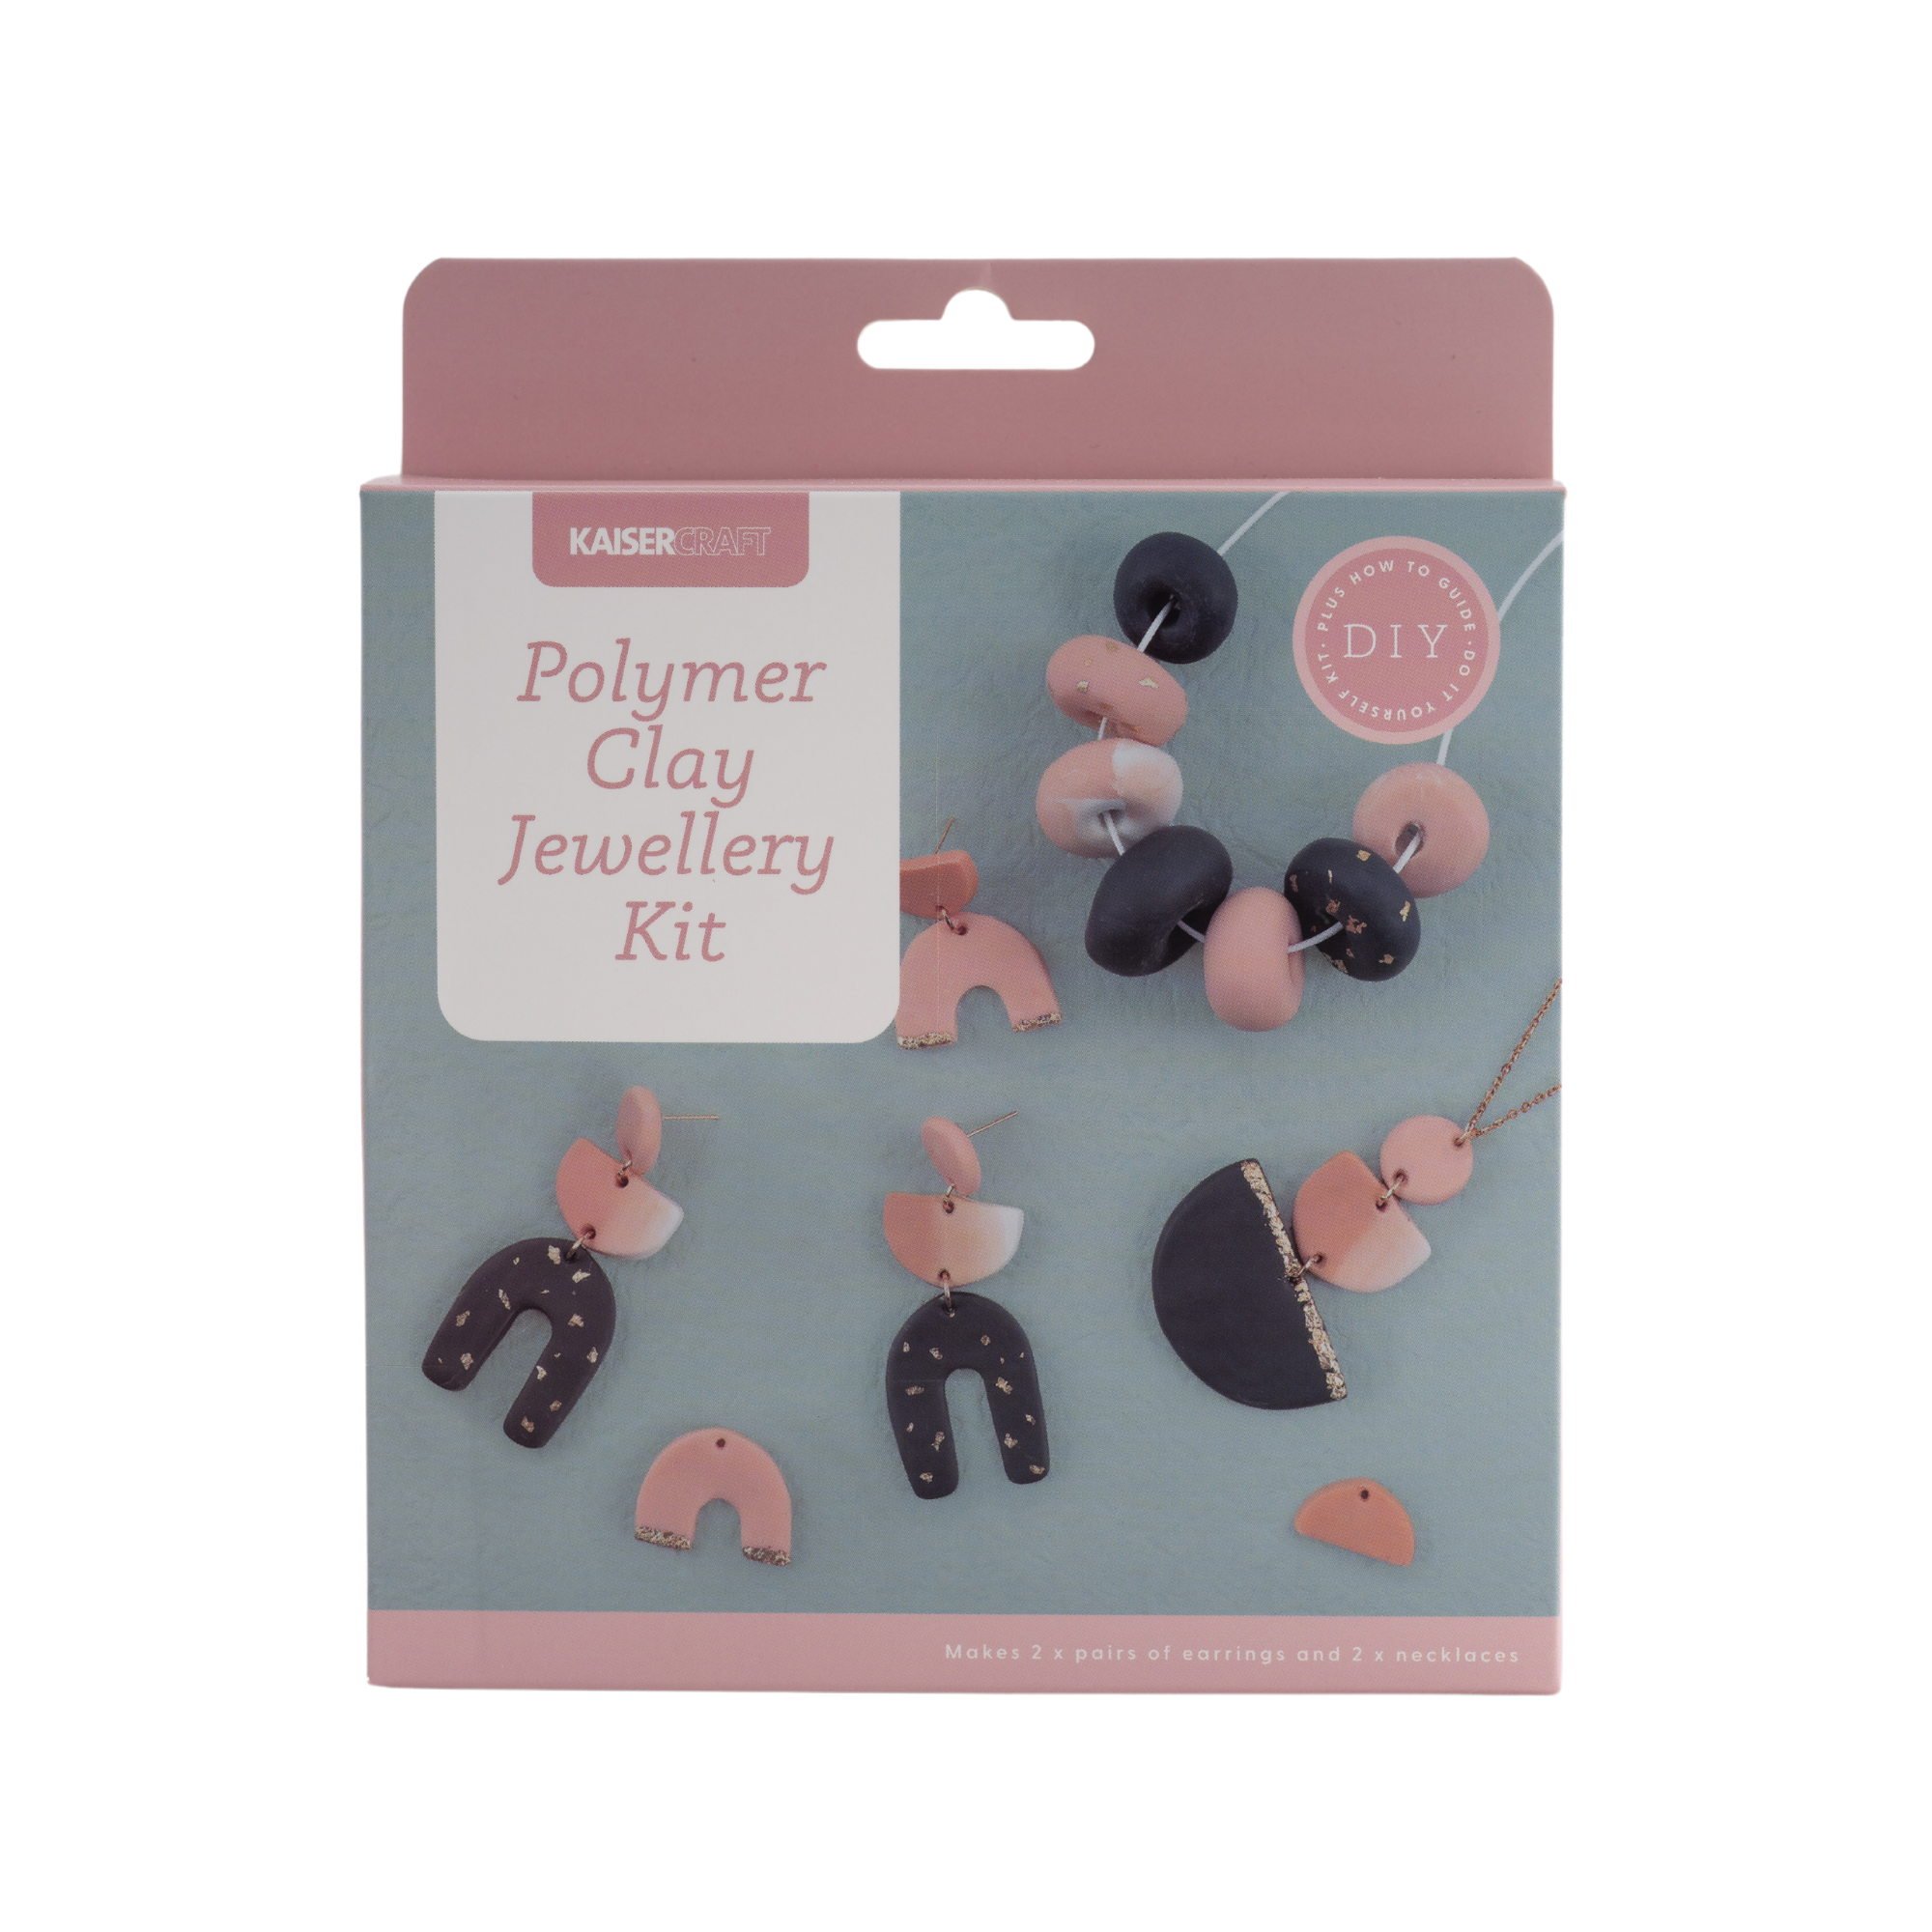 Polymer Clay Kit - Jewellery Pine